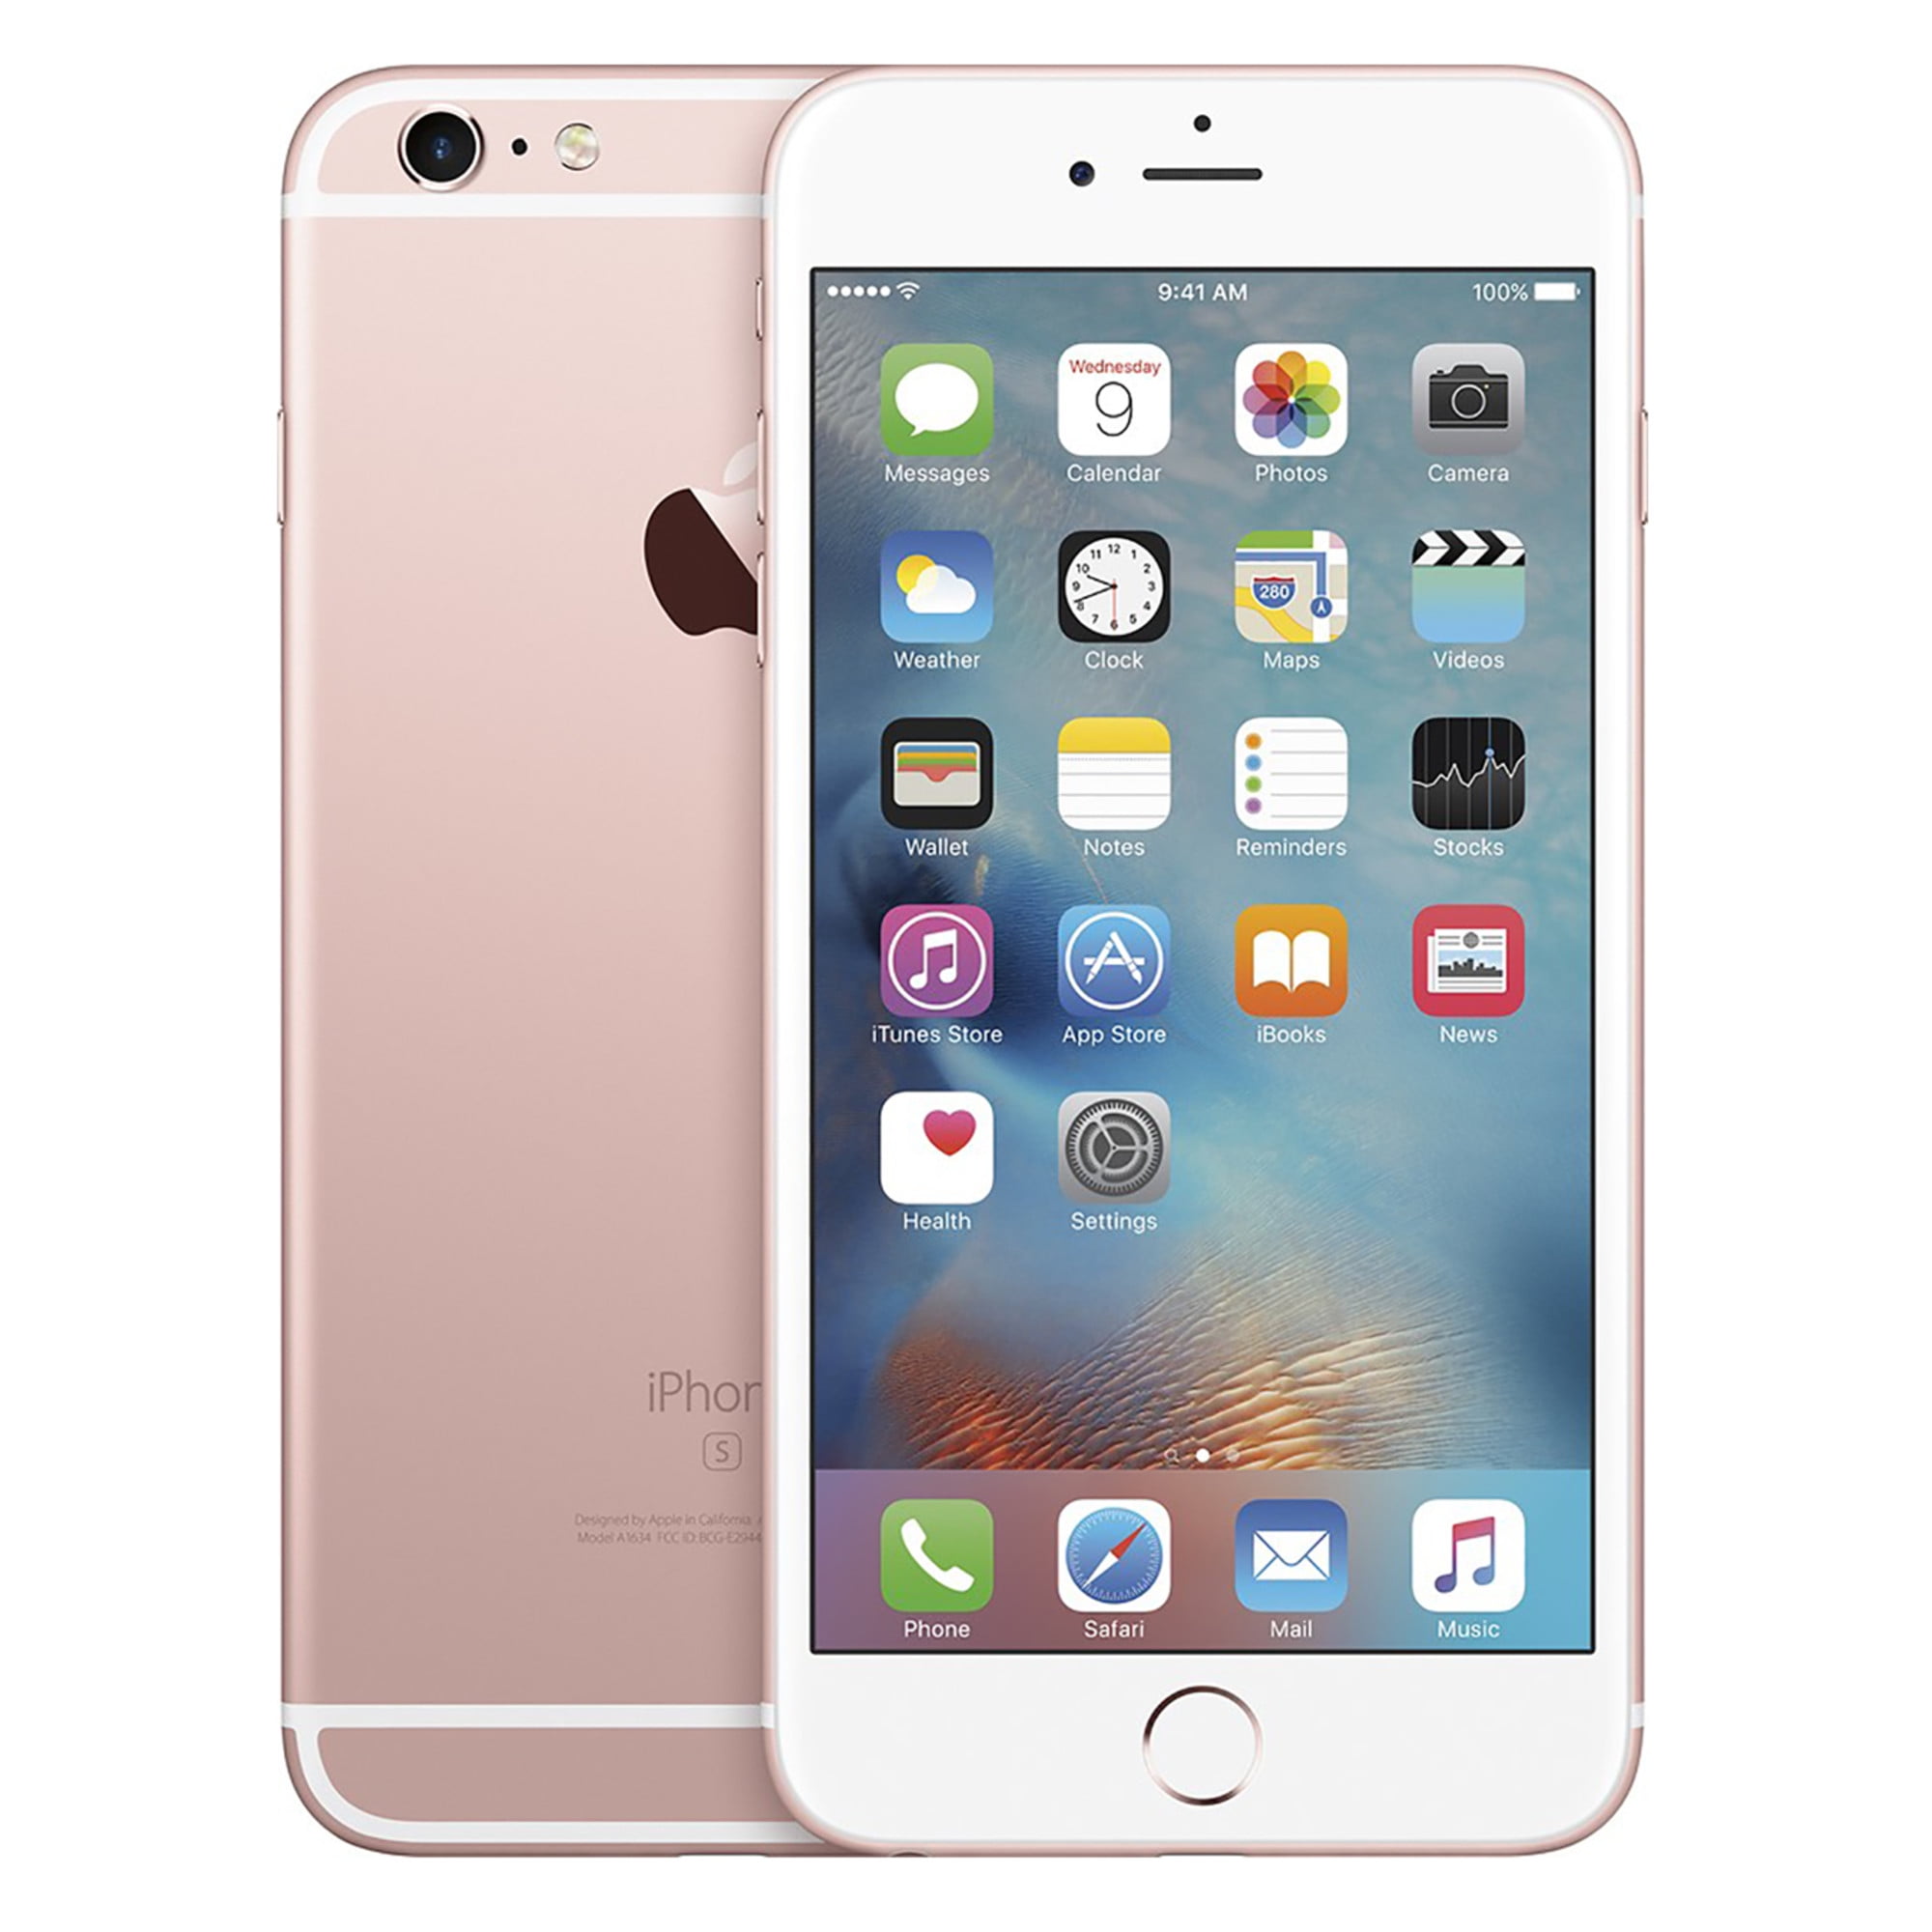 Restored Apple iPhone 6S Plus 16GB, Rose Gold - Locked AT&T (Refurbished)